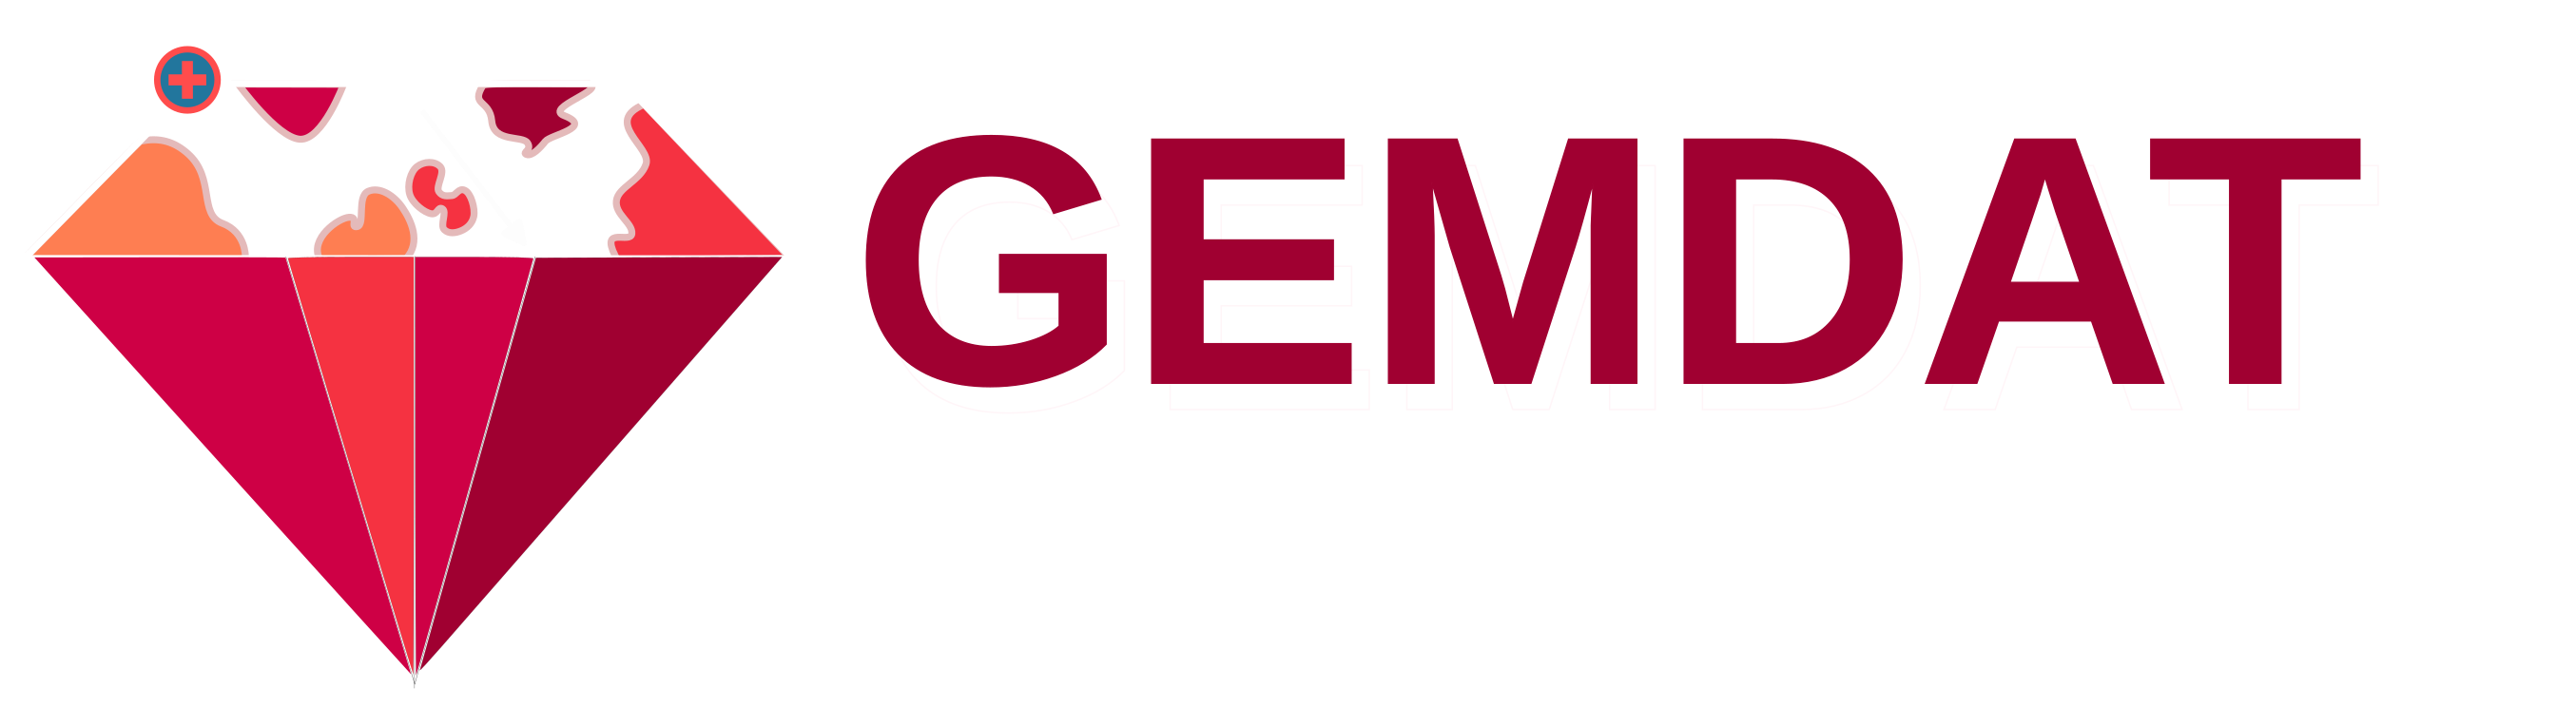 GEMDAT banner